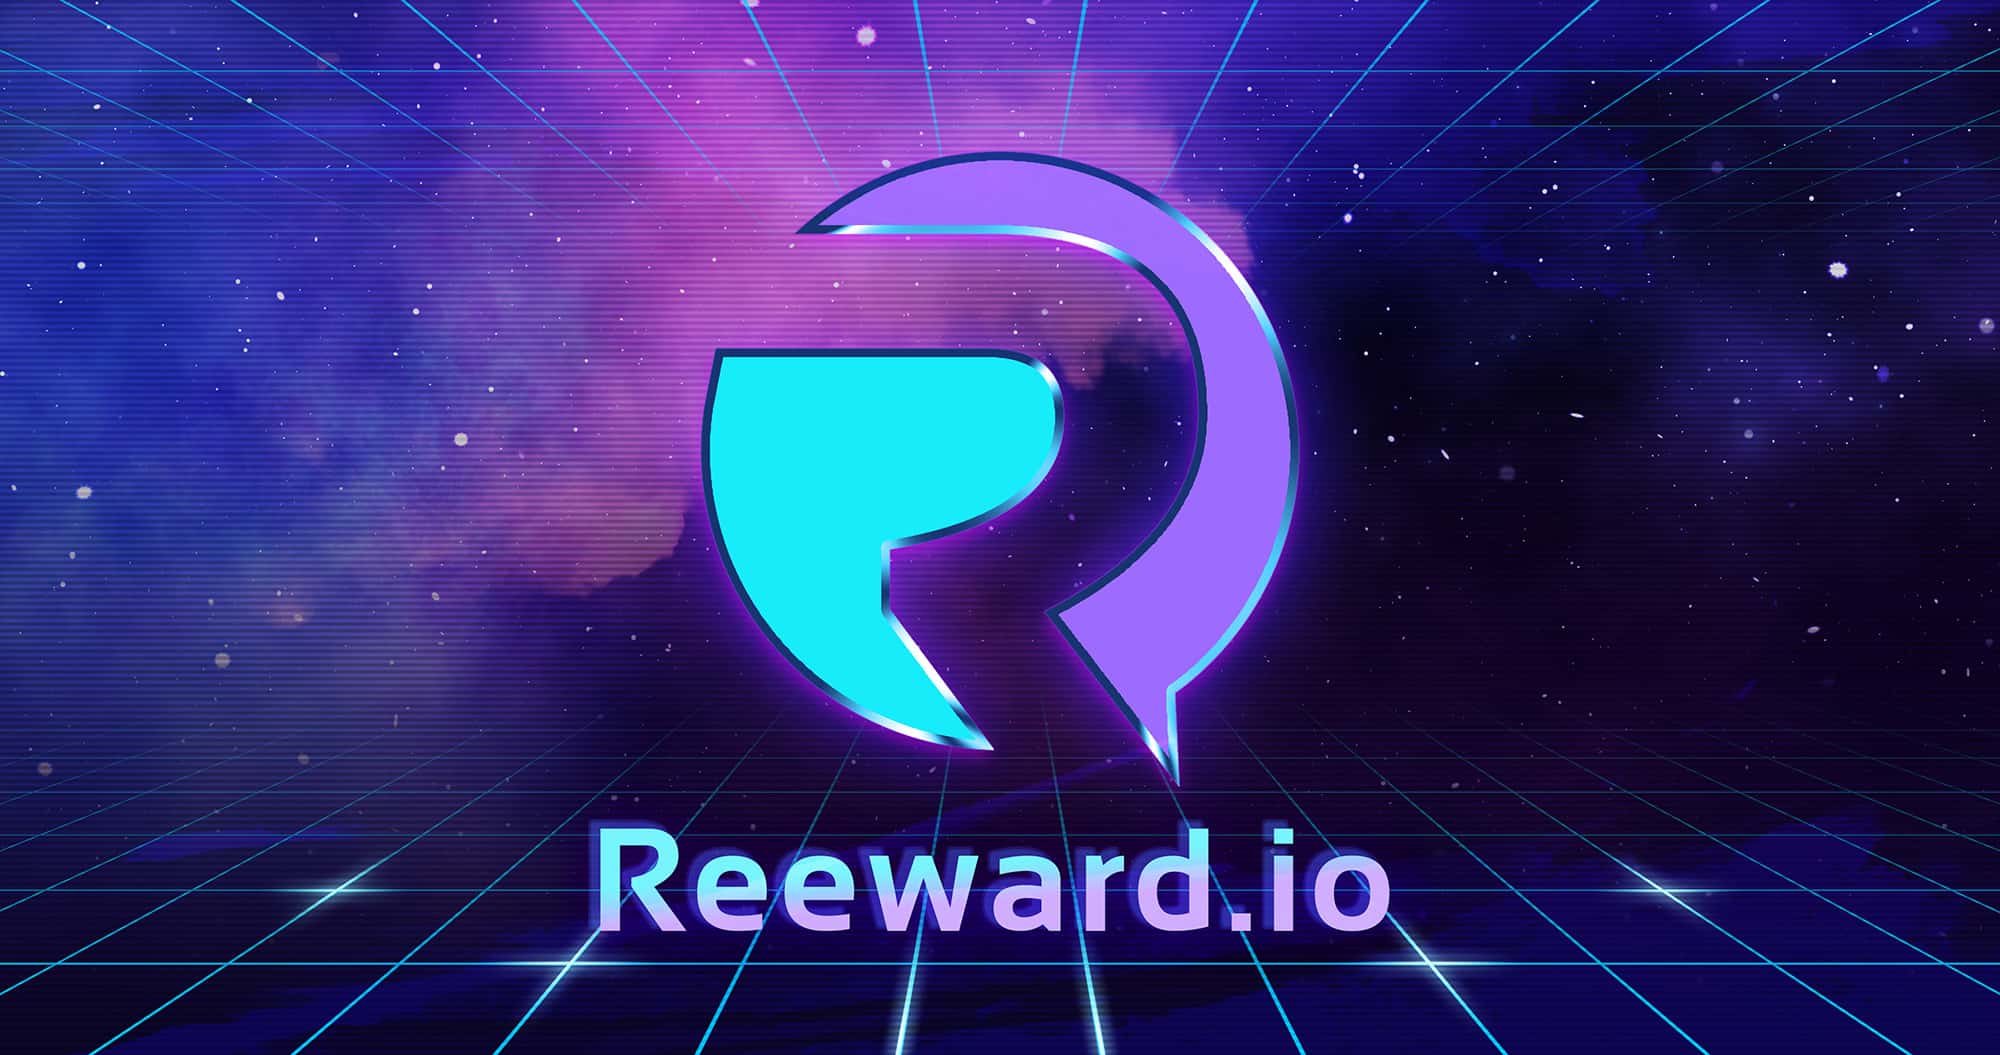 reewardio blockchain based rewards The innovating Enjin-based rewarding platform launches today in beta version at 2 PM UTC.